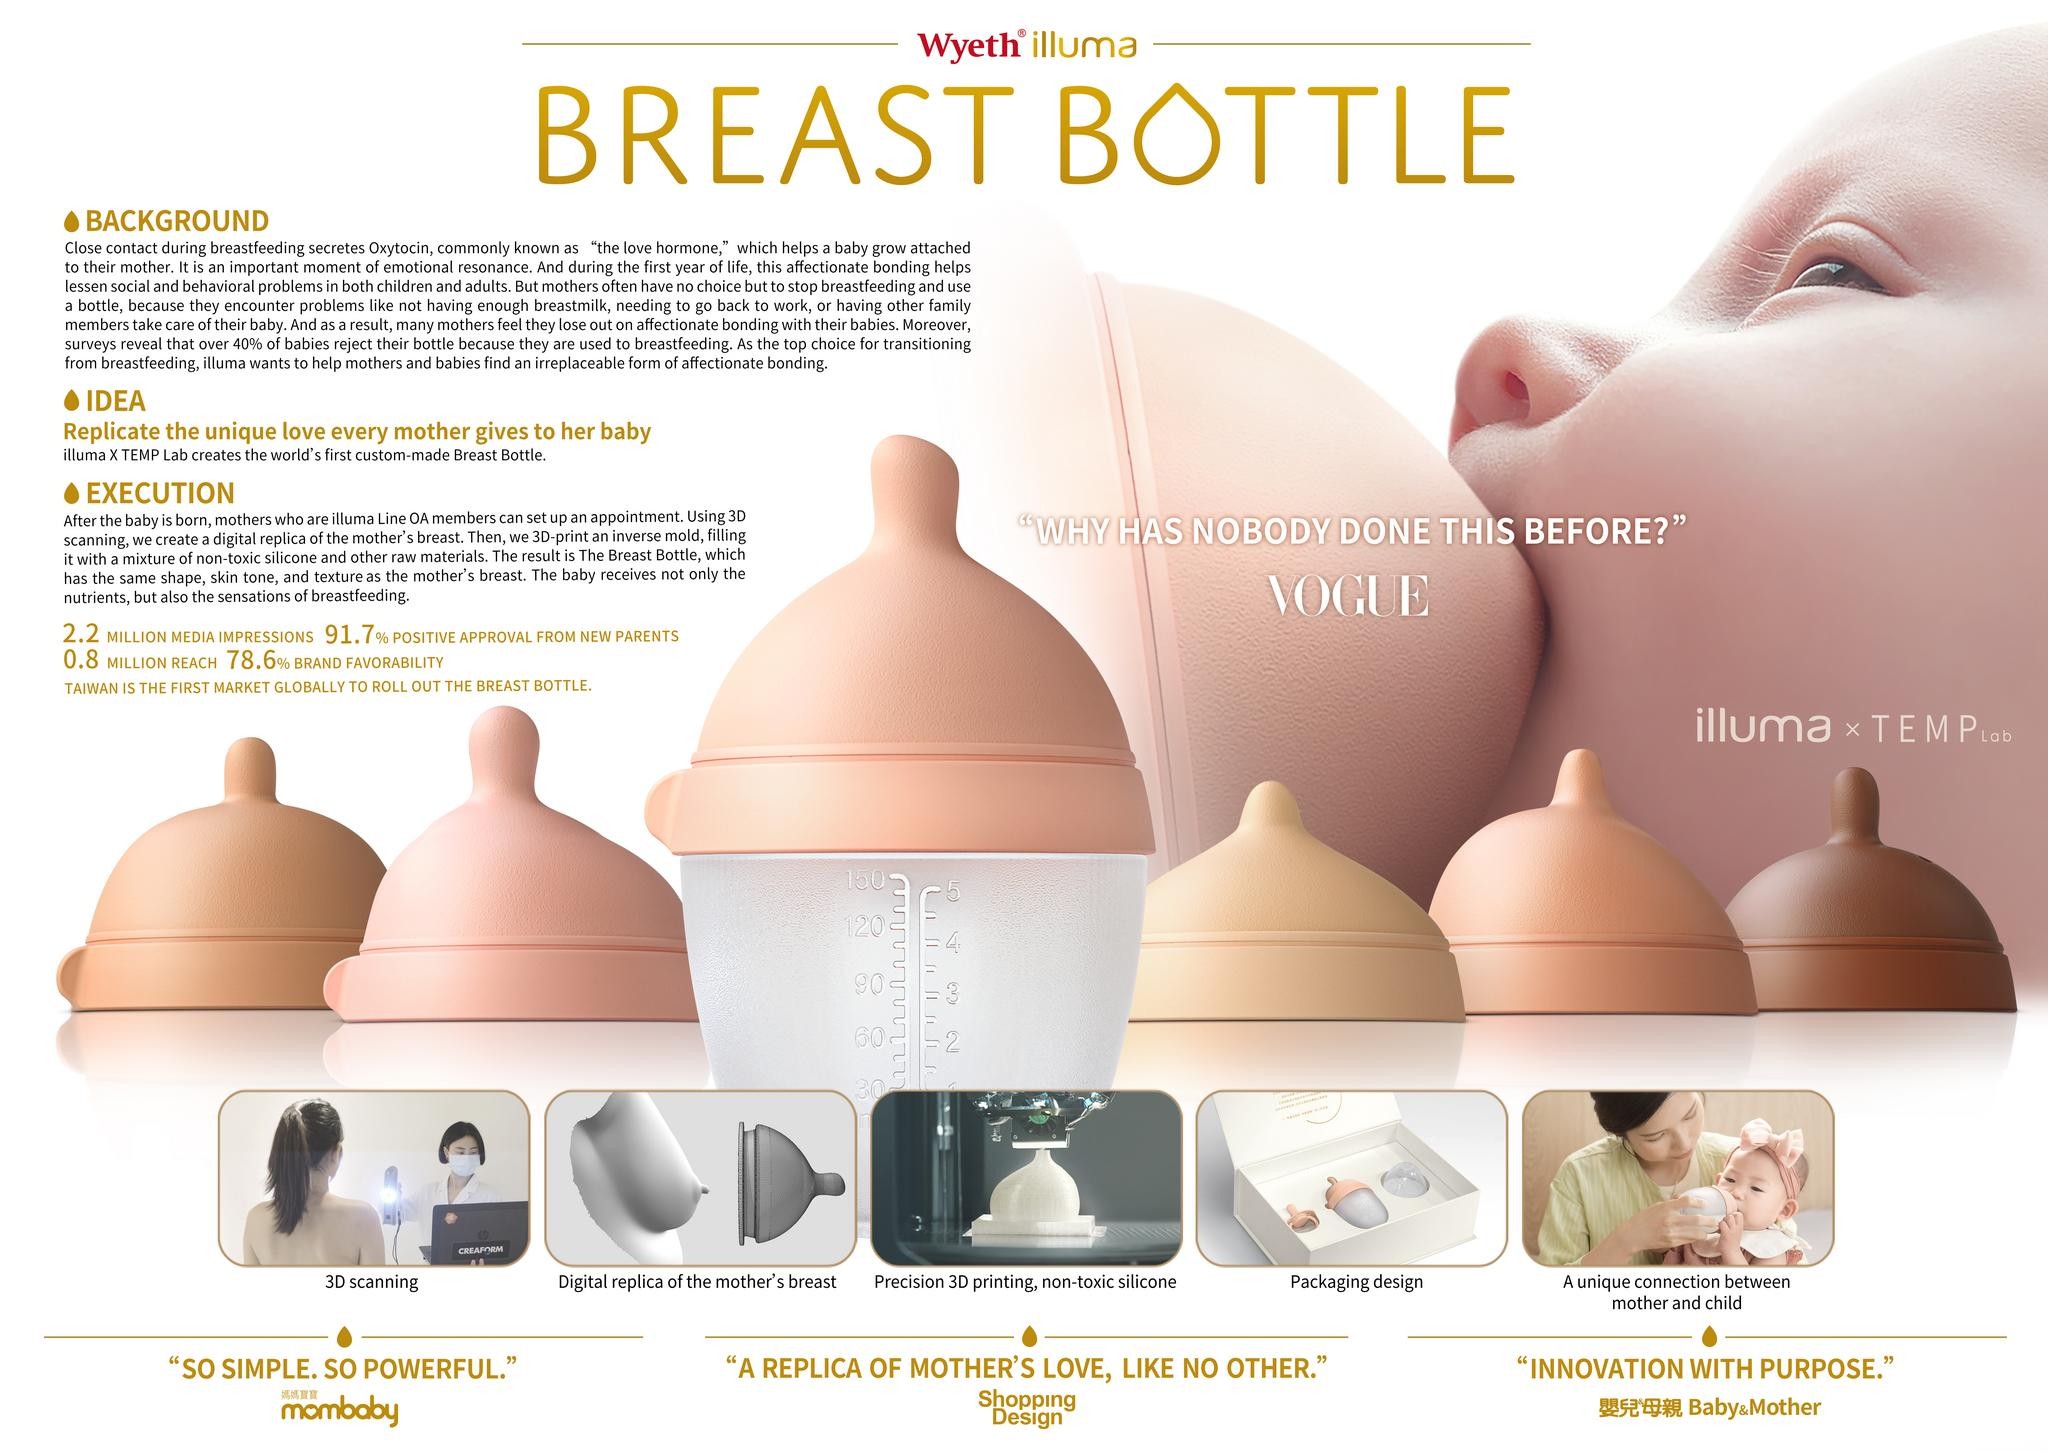 The Breast Bottle